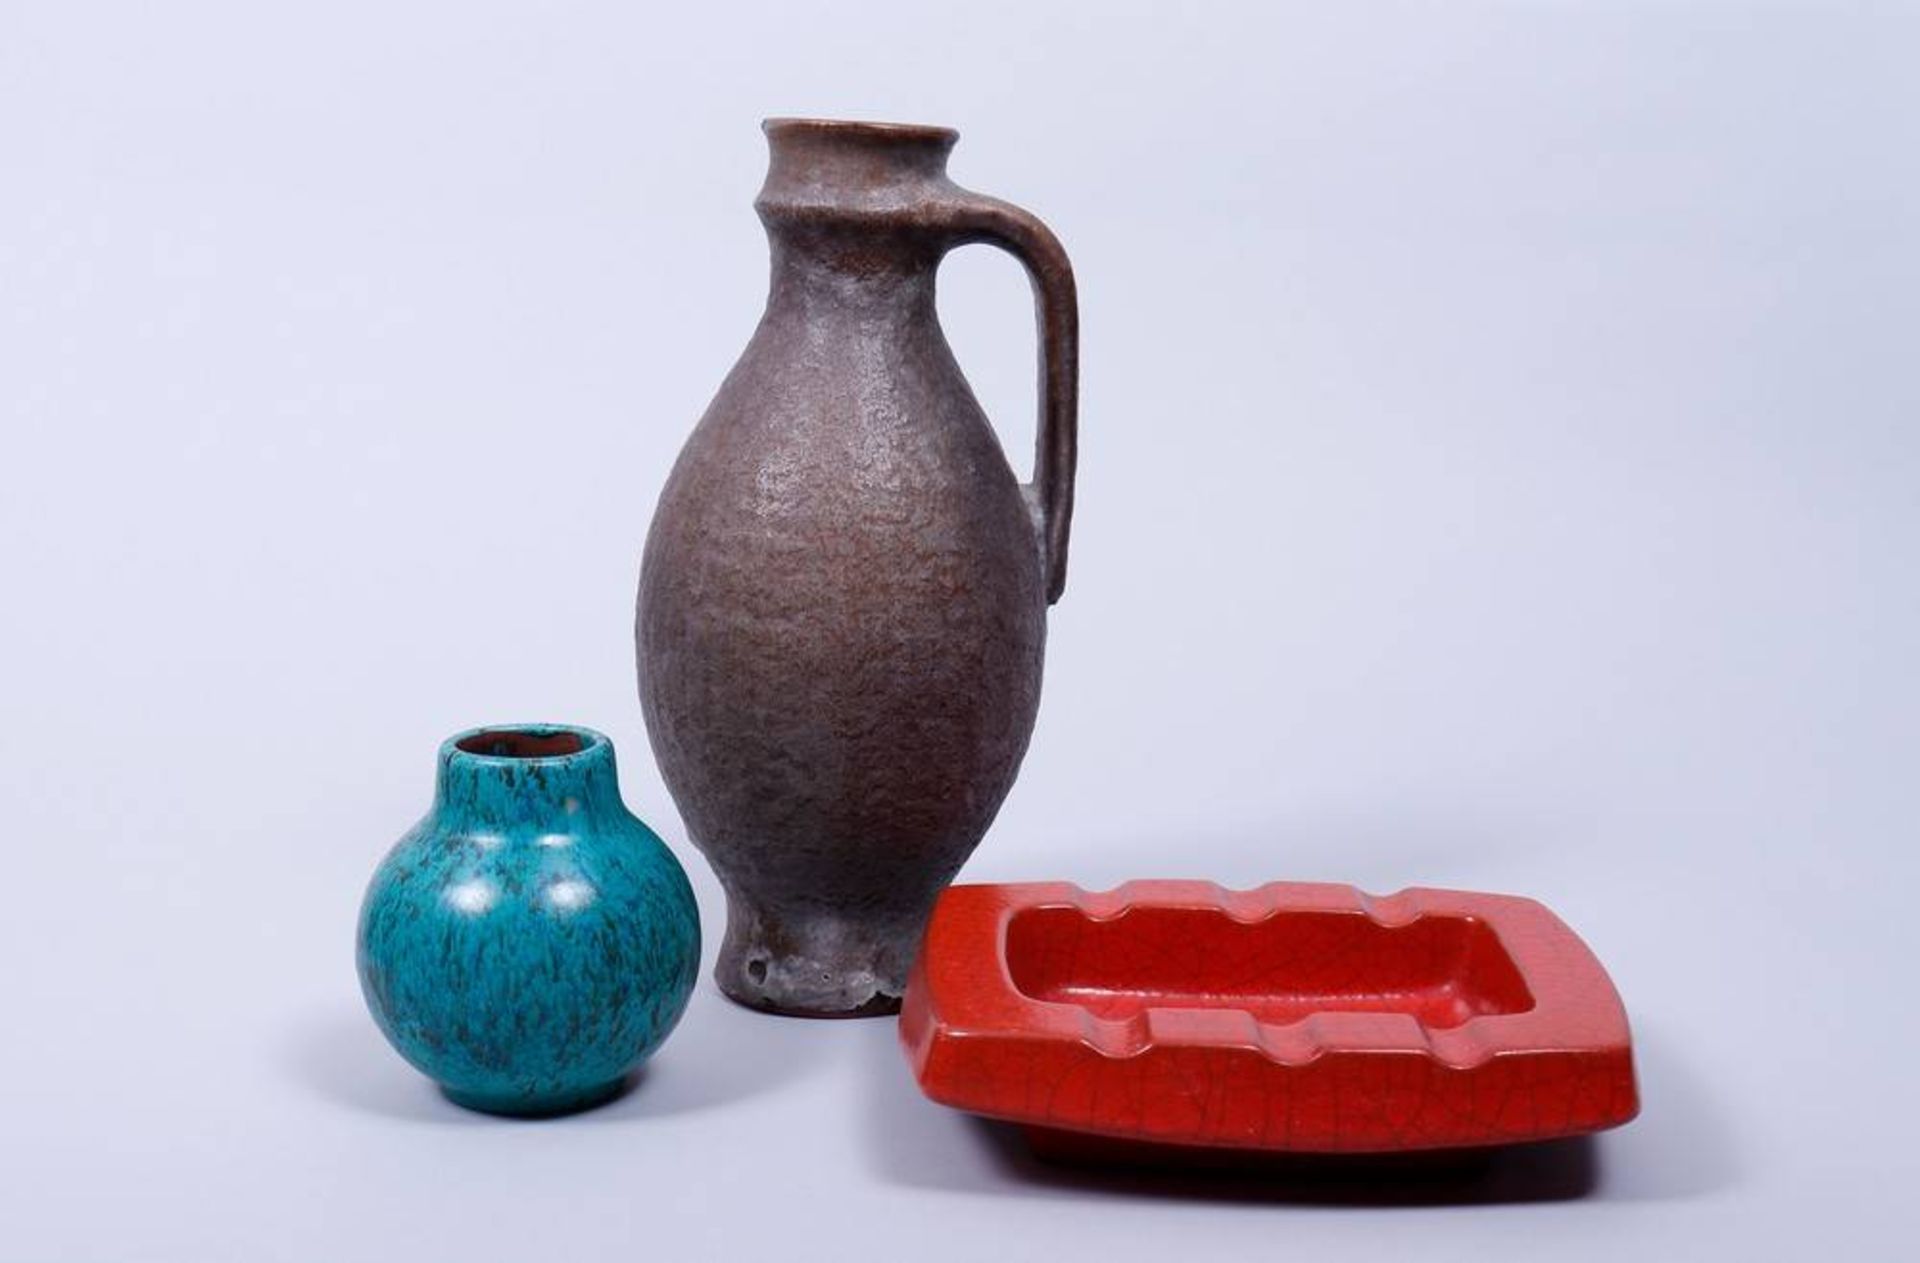 Kleines Konvolut Keramik, Karlsruher Majolika, um 1960 bestehend aus 1 Krug und 1 Vase, Entwurf